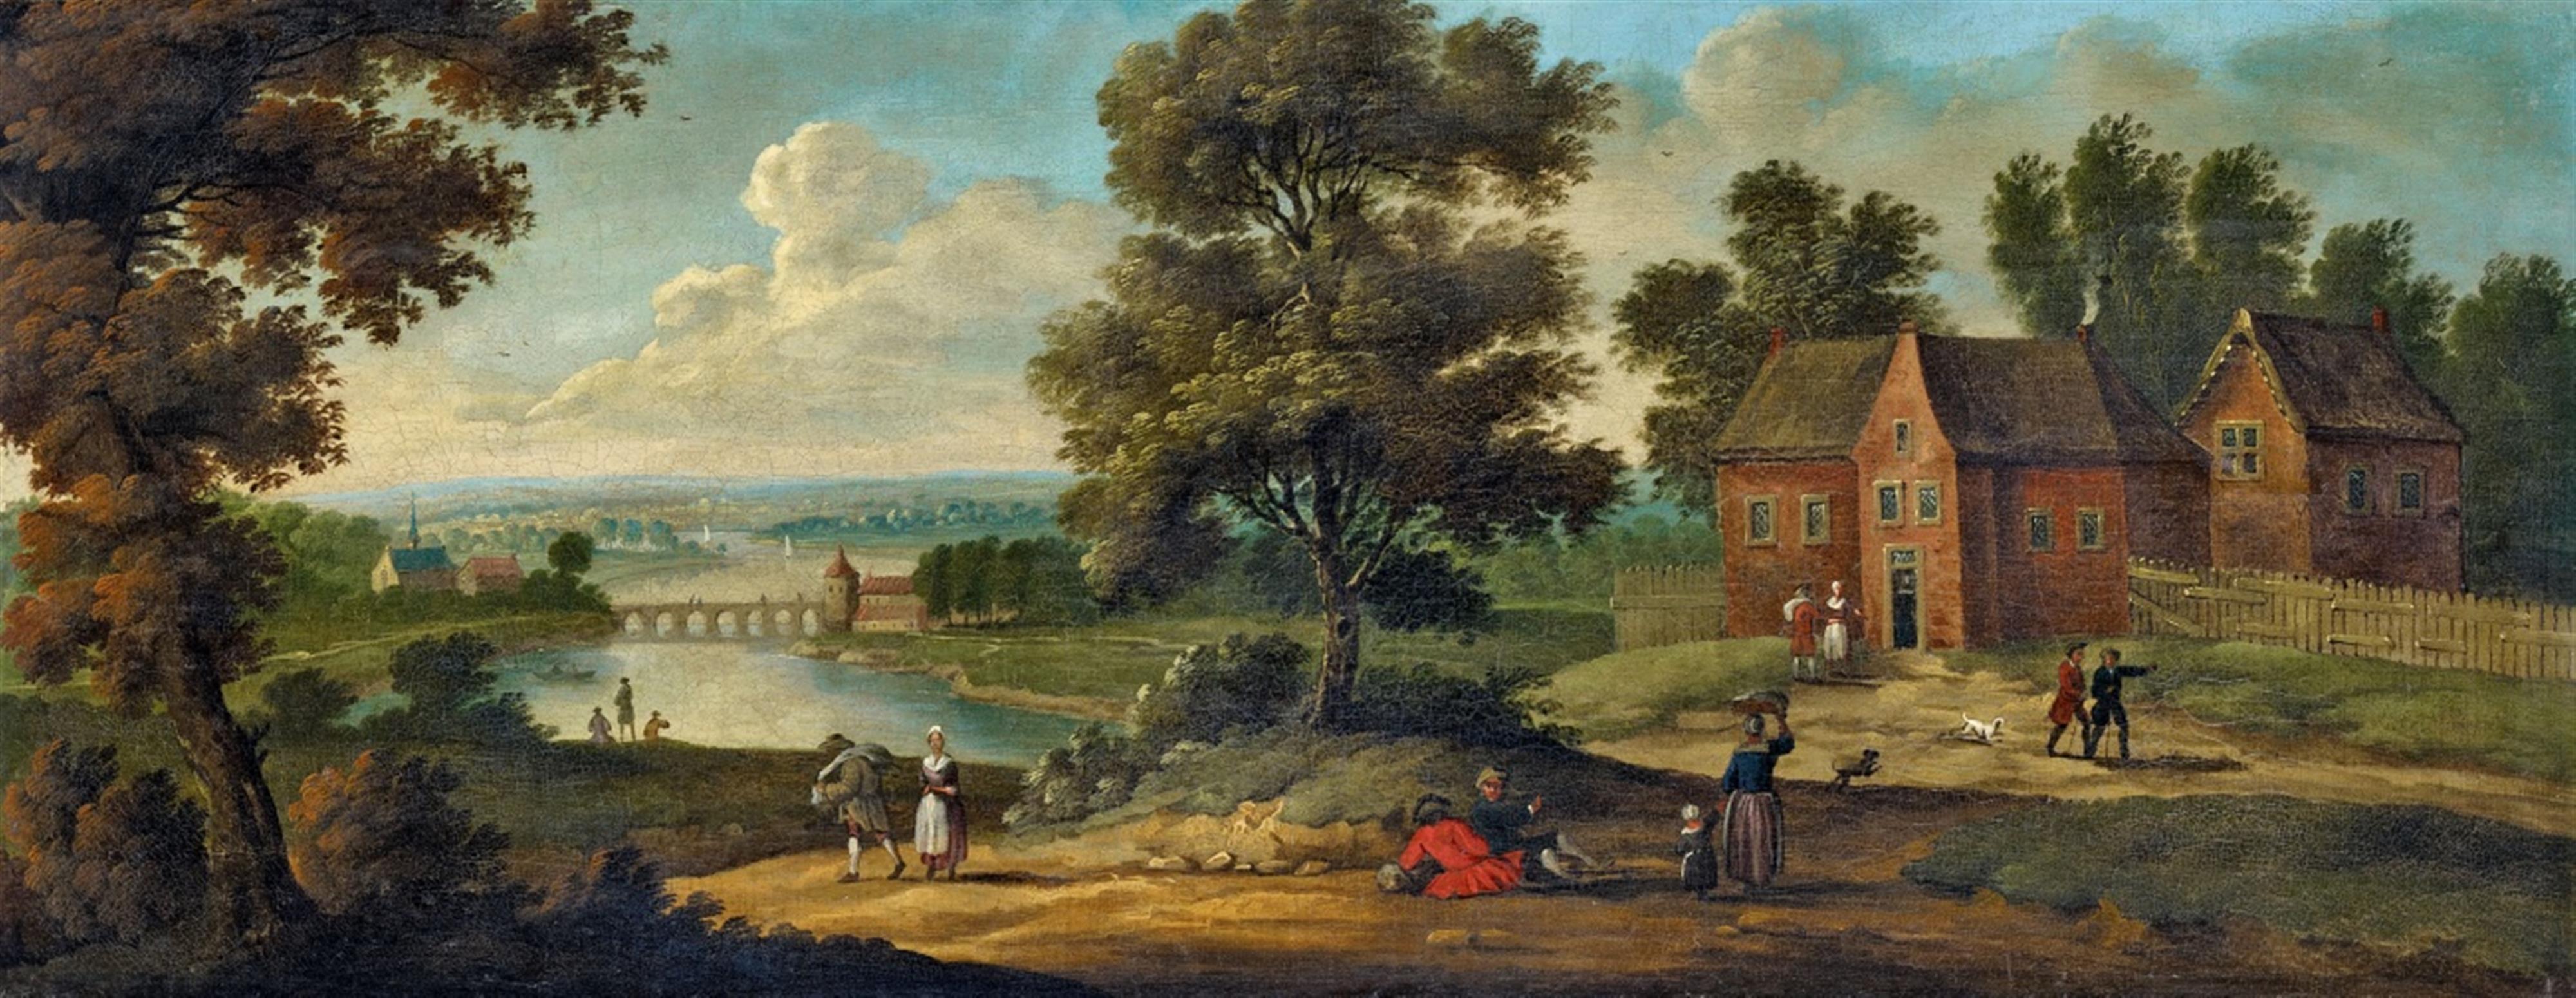 Jan Frans van Bredael - Dörfliche Landschaft an einem Fluss mit Staffagefiguren - image-1